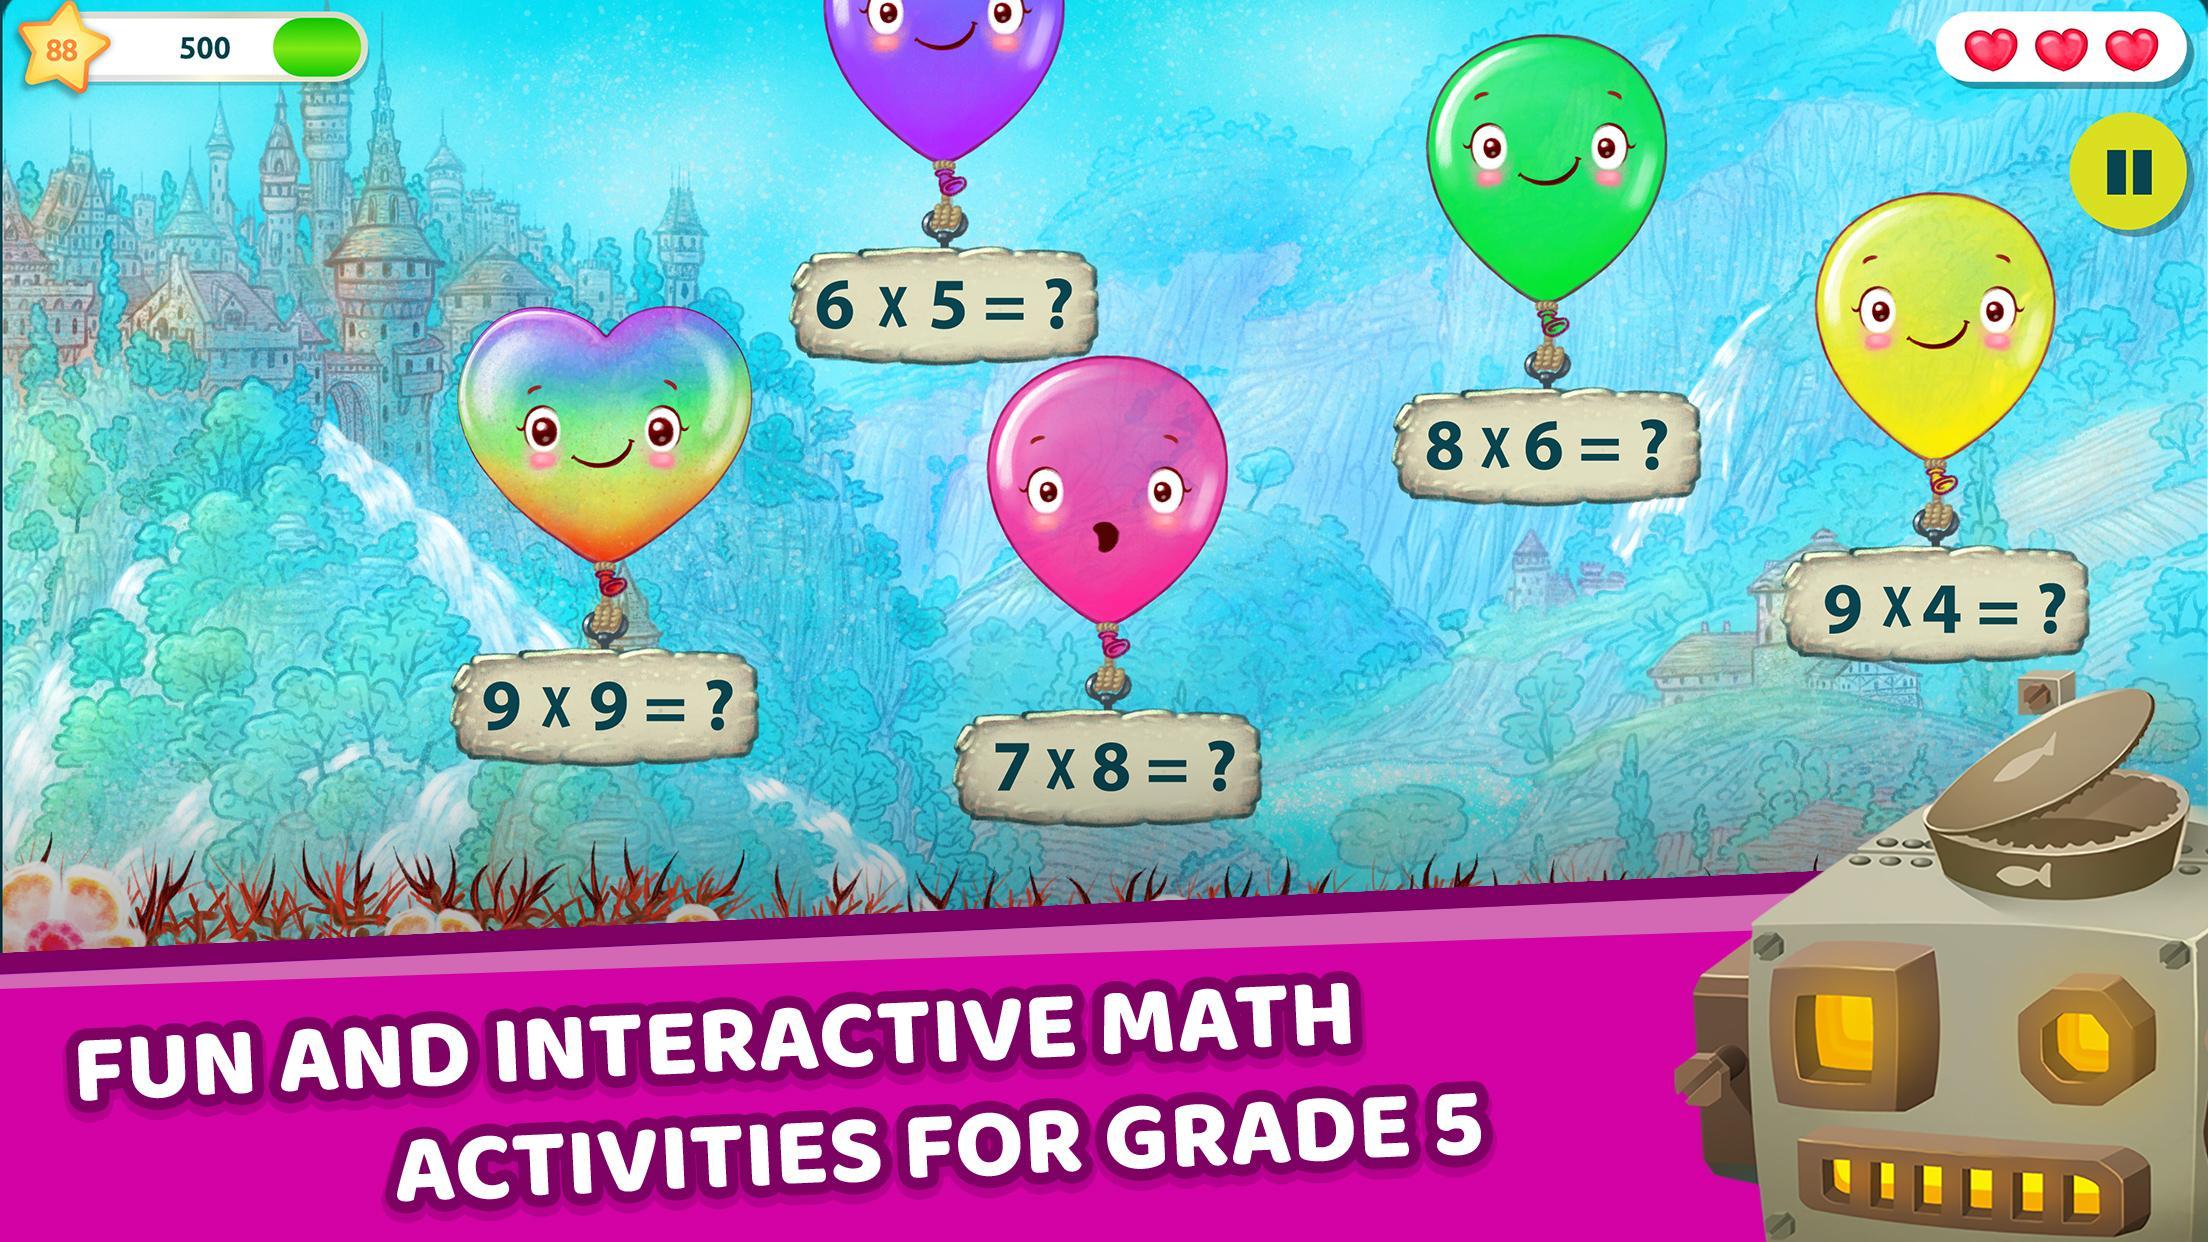 Matific Galaxy - Maths Games for 5th Graders 2.2.2 Screenshot 3